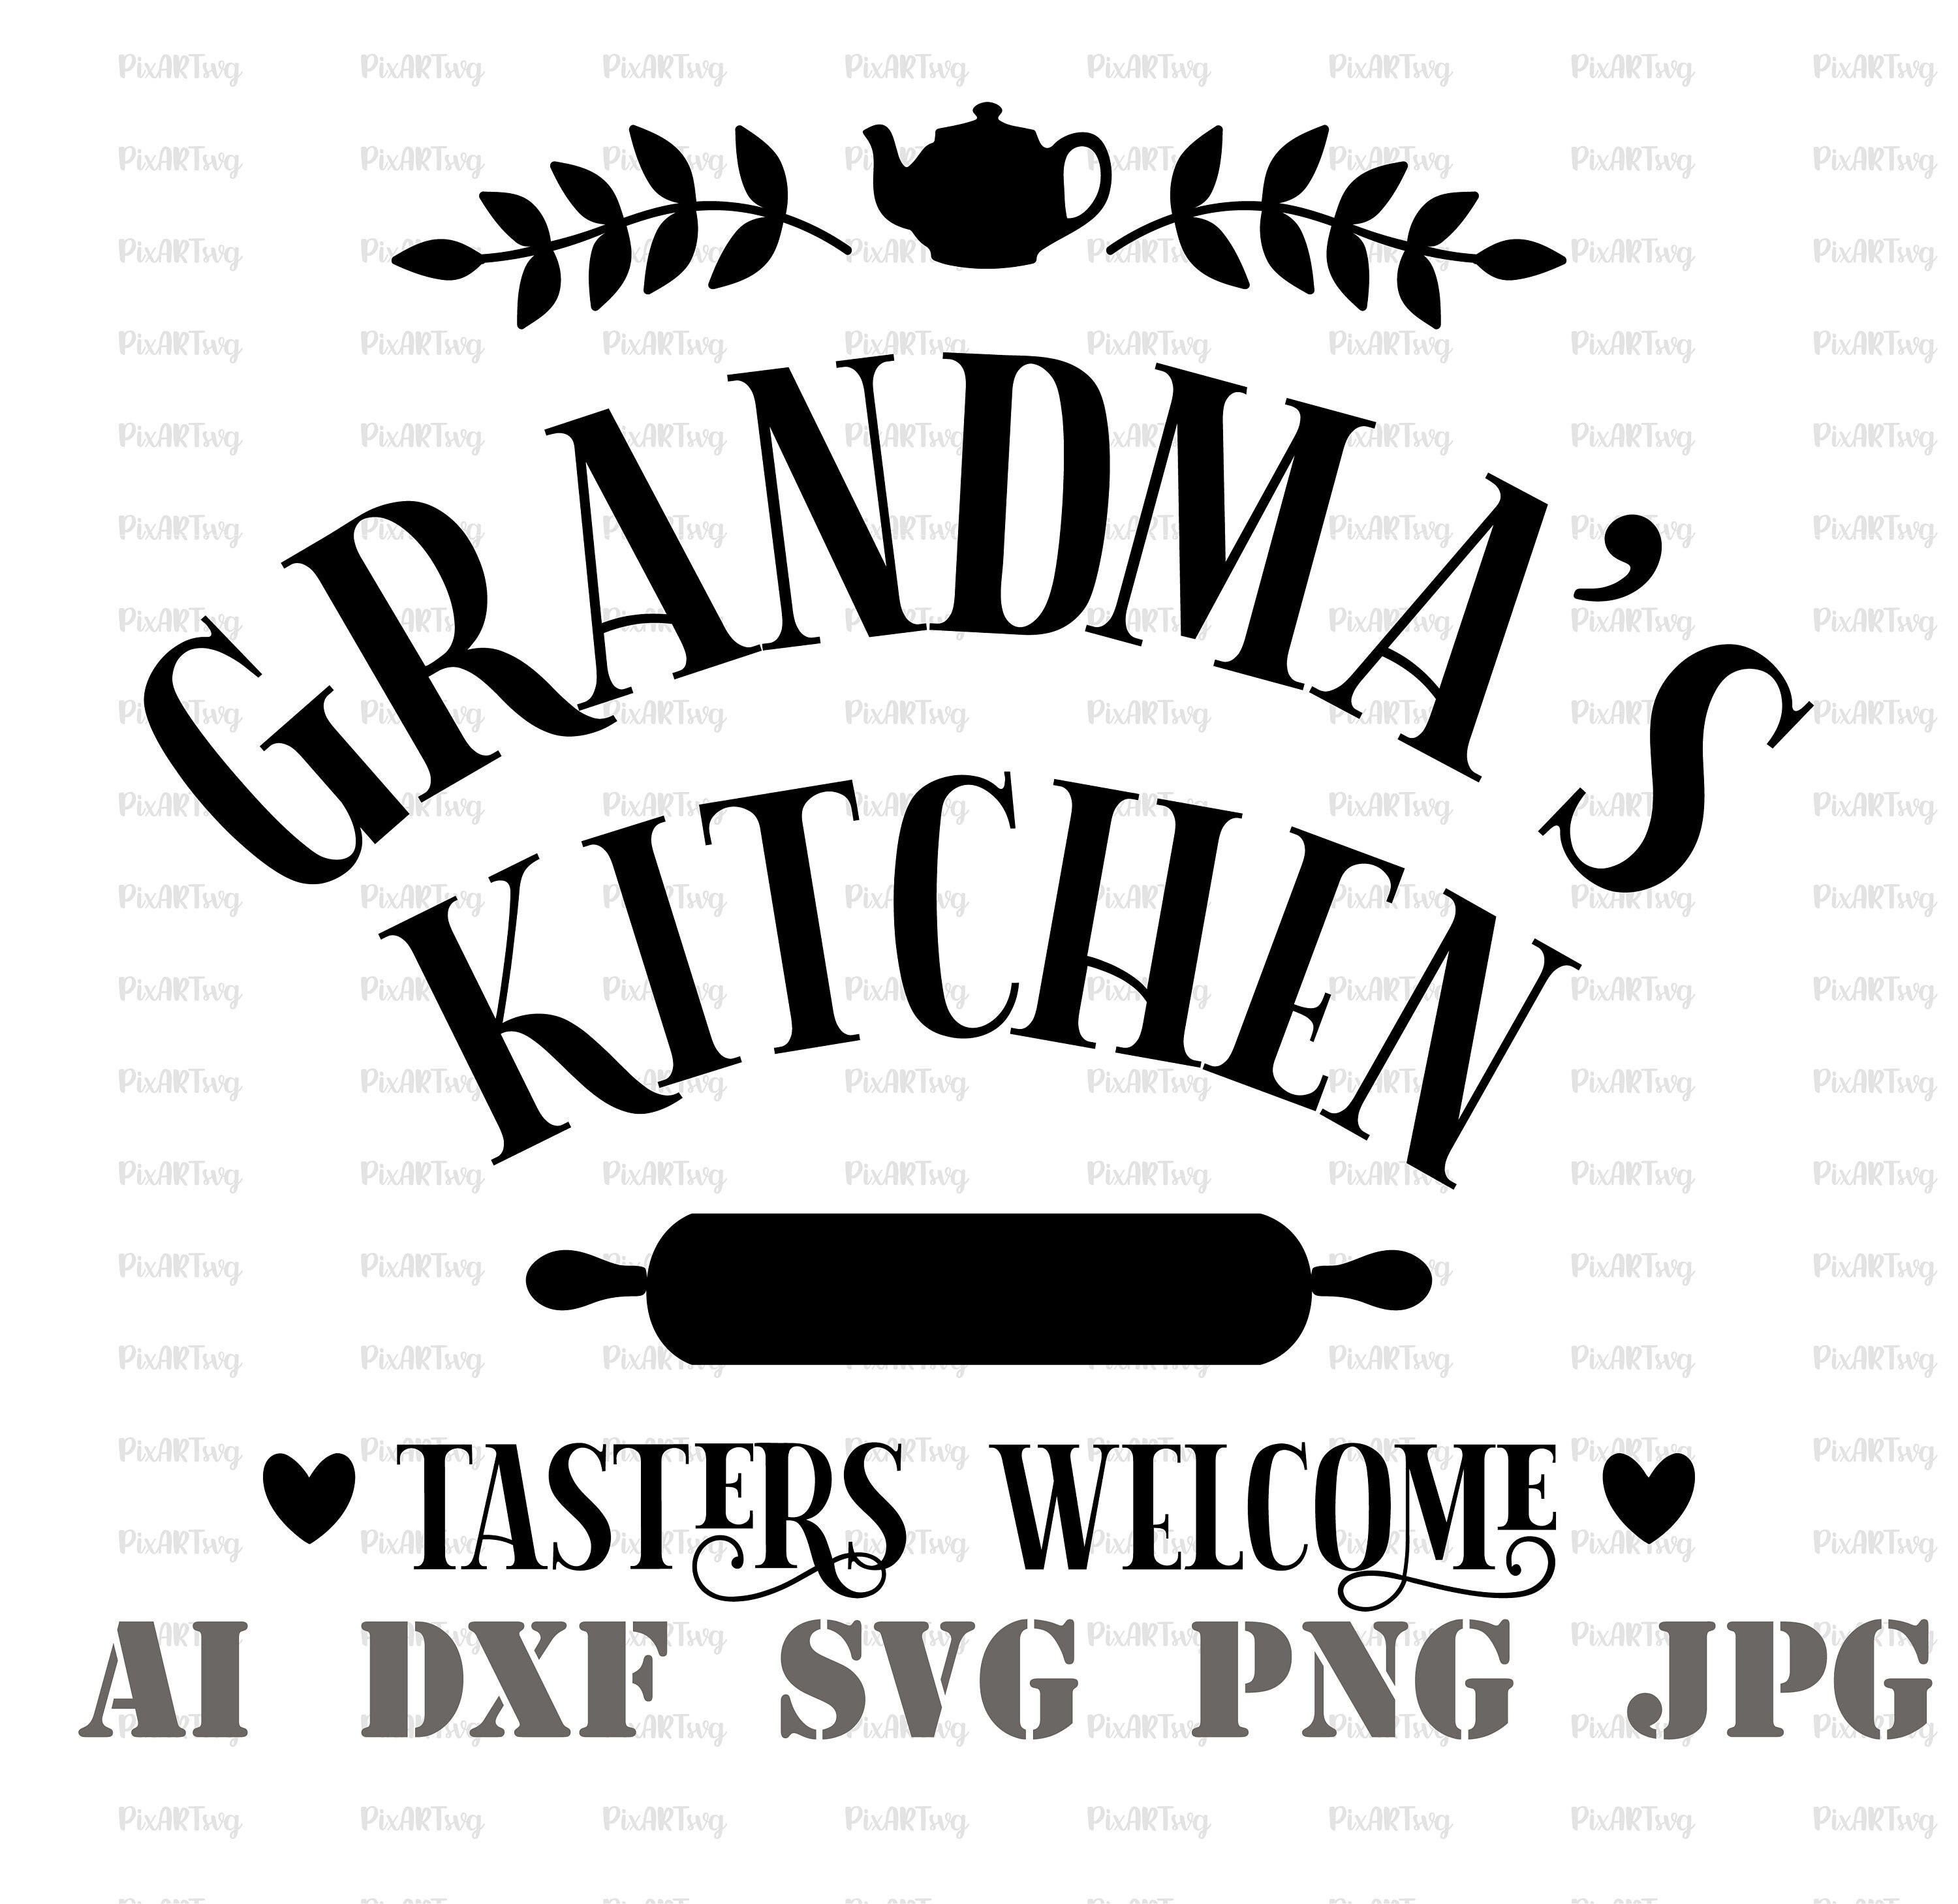 From Grandma's Kitchen